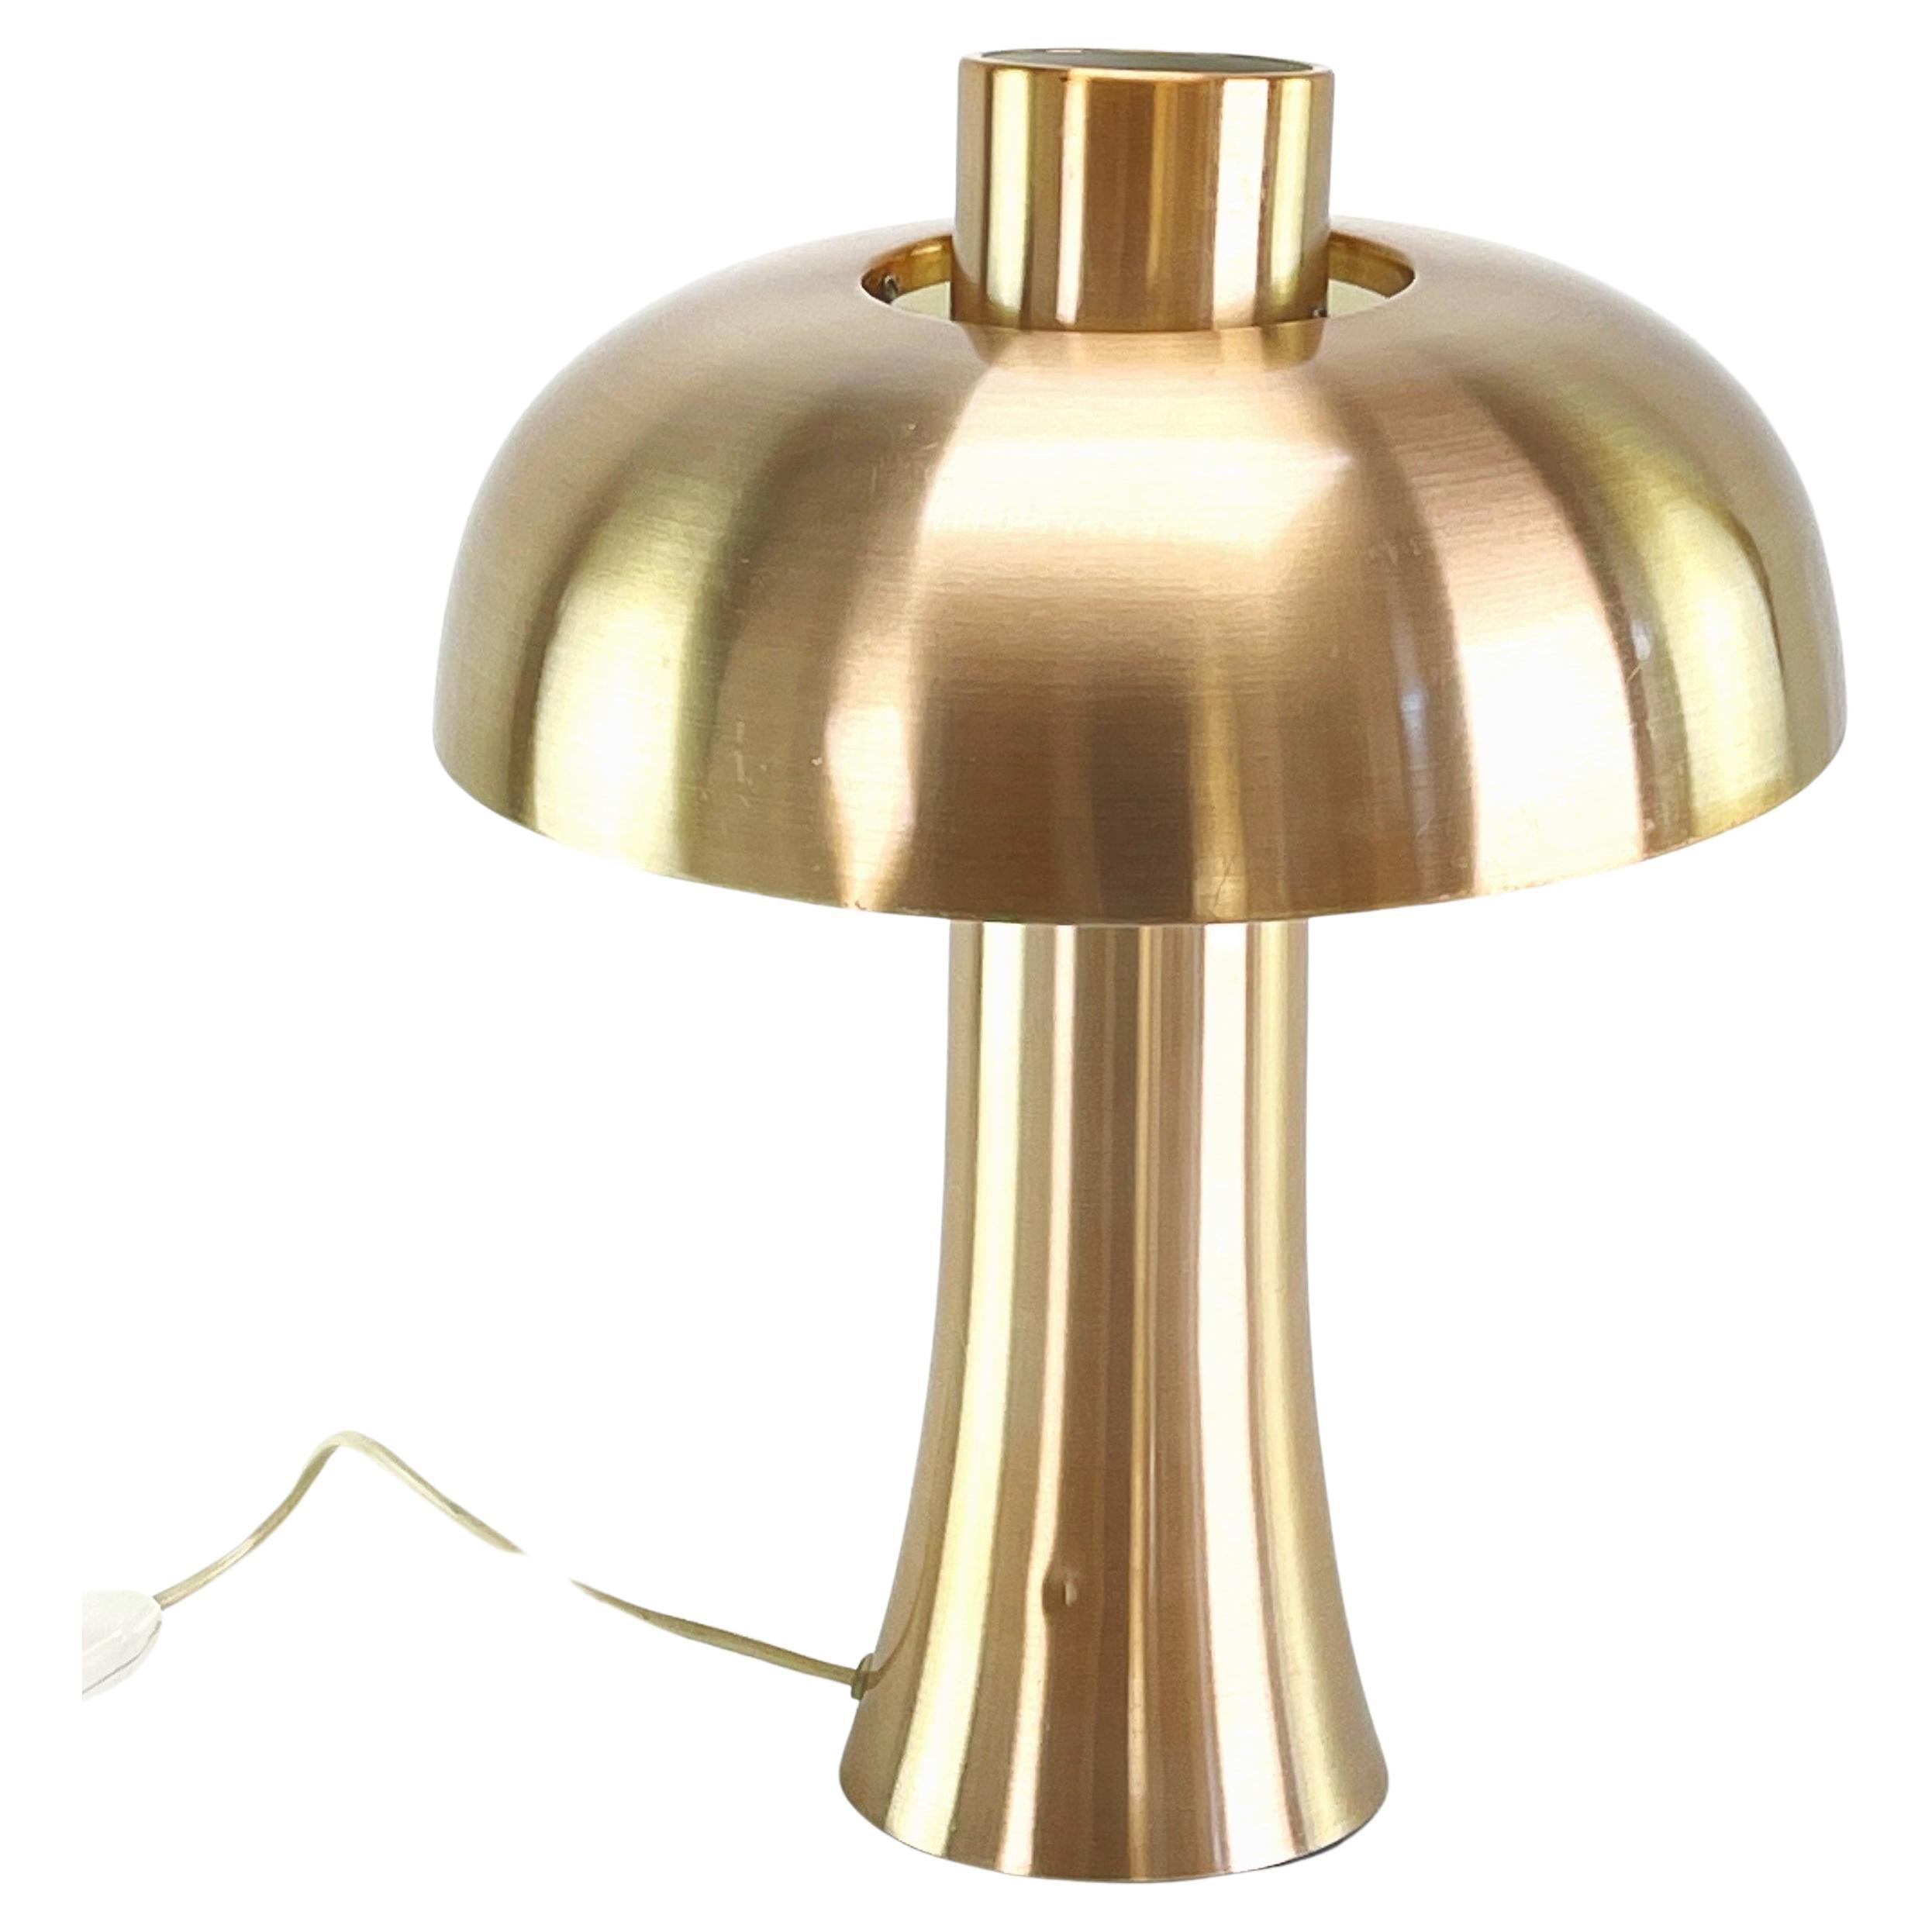  Table Mushroom Lamp, Copper-Coloured by DORIA, 1970s